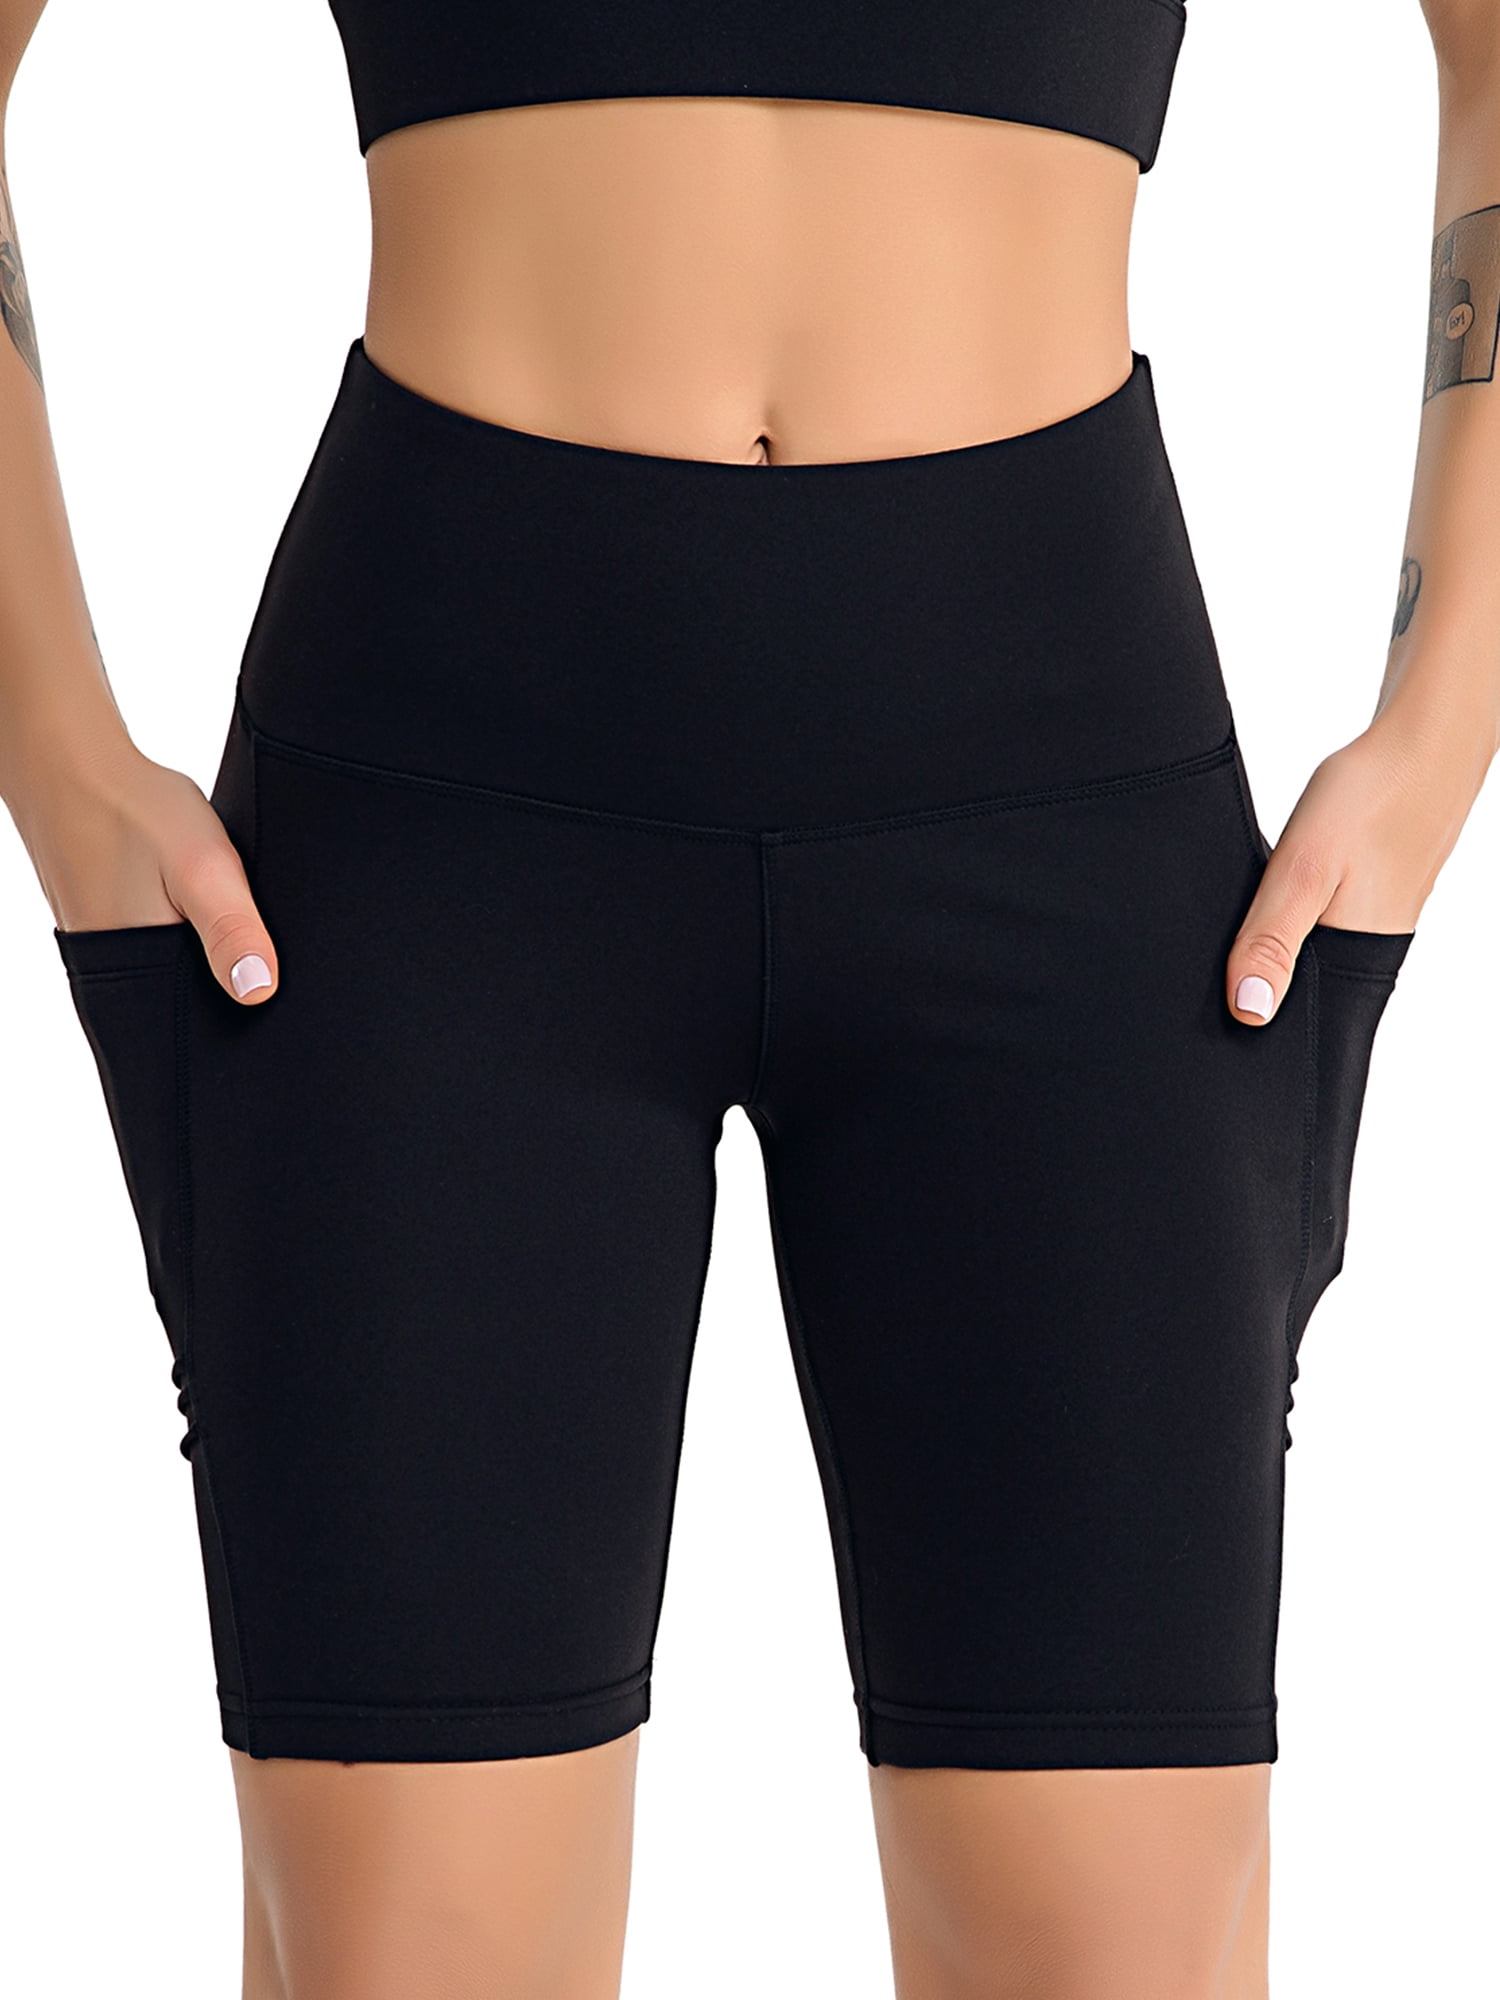 LIFE SKY Yoga Shorts for Women High Waist Tummy Control Biker Short Pants Workout Running Leggings